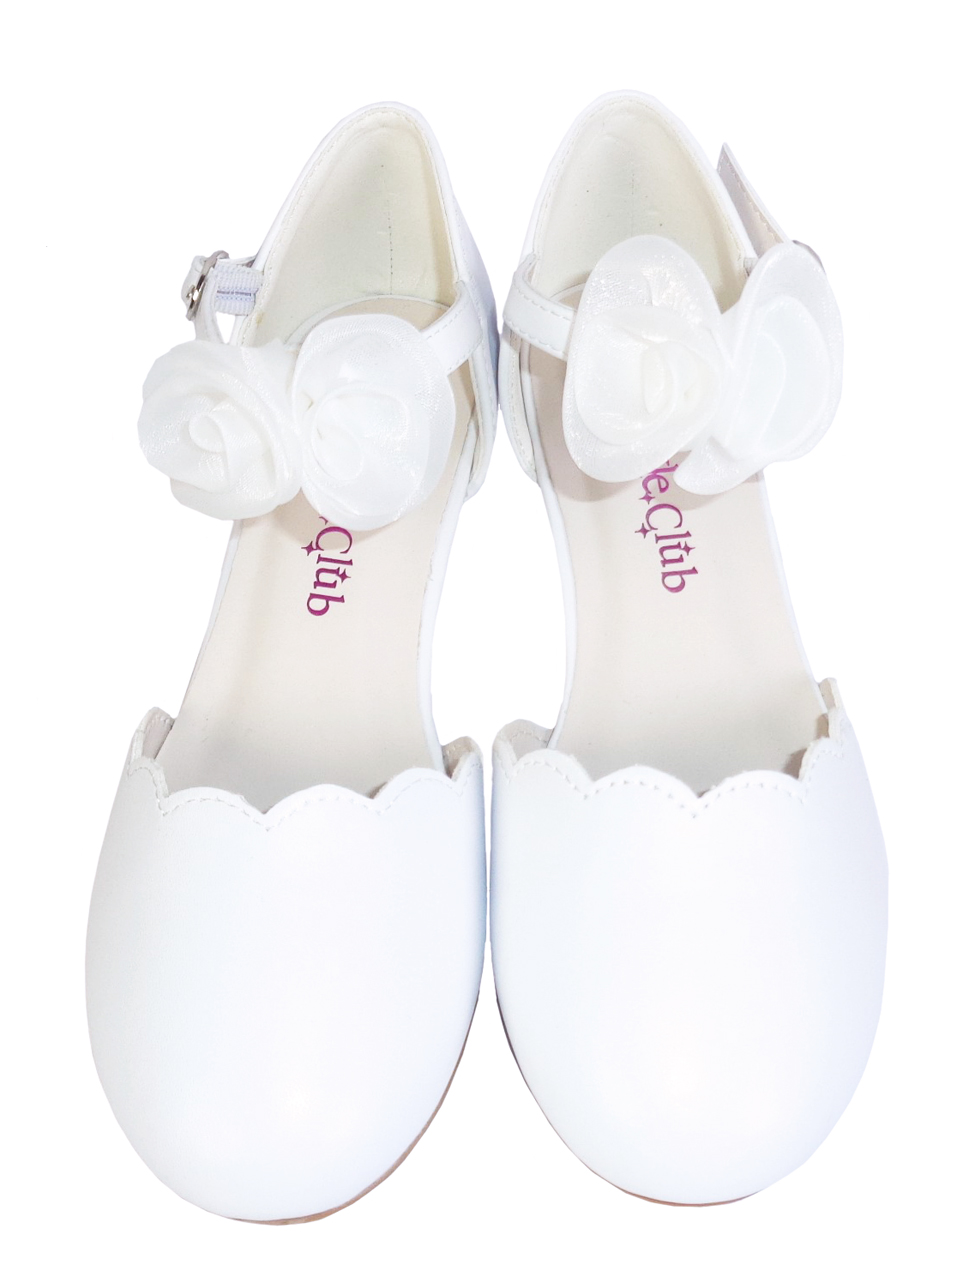 Girls white heeled shoes